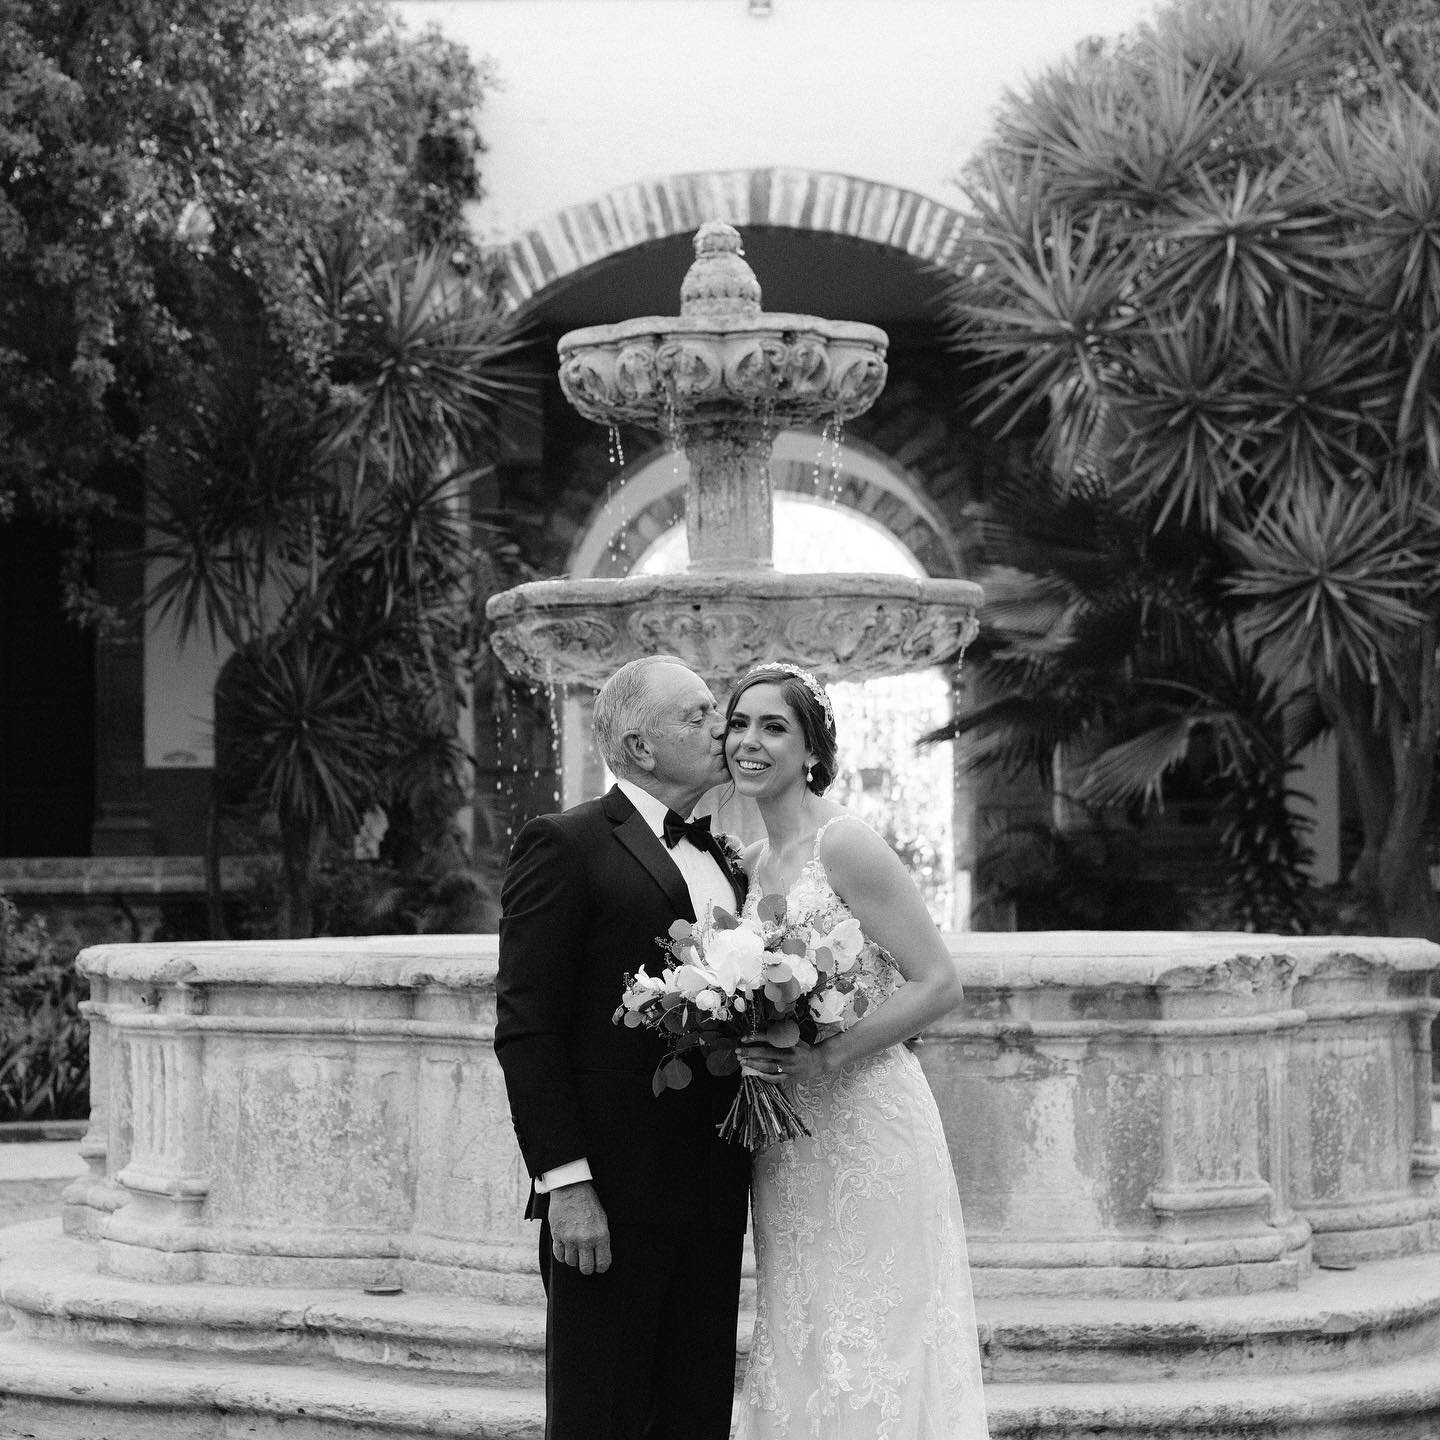 &ldquo;The memories we make with our family is everything&rdquo;

WP: @santoamorweddingplanner 
Video: @peppermint.weddingfilms 
Venue: @institutoallende 

#SanMiguelDeAllende #DestinationWedding #WeddingPhotography #CasateEnSanMiguel #Wedding #Weddi